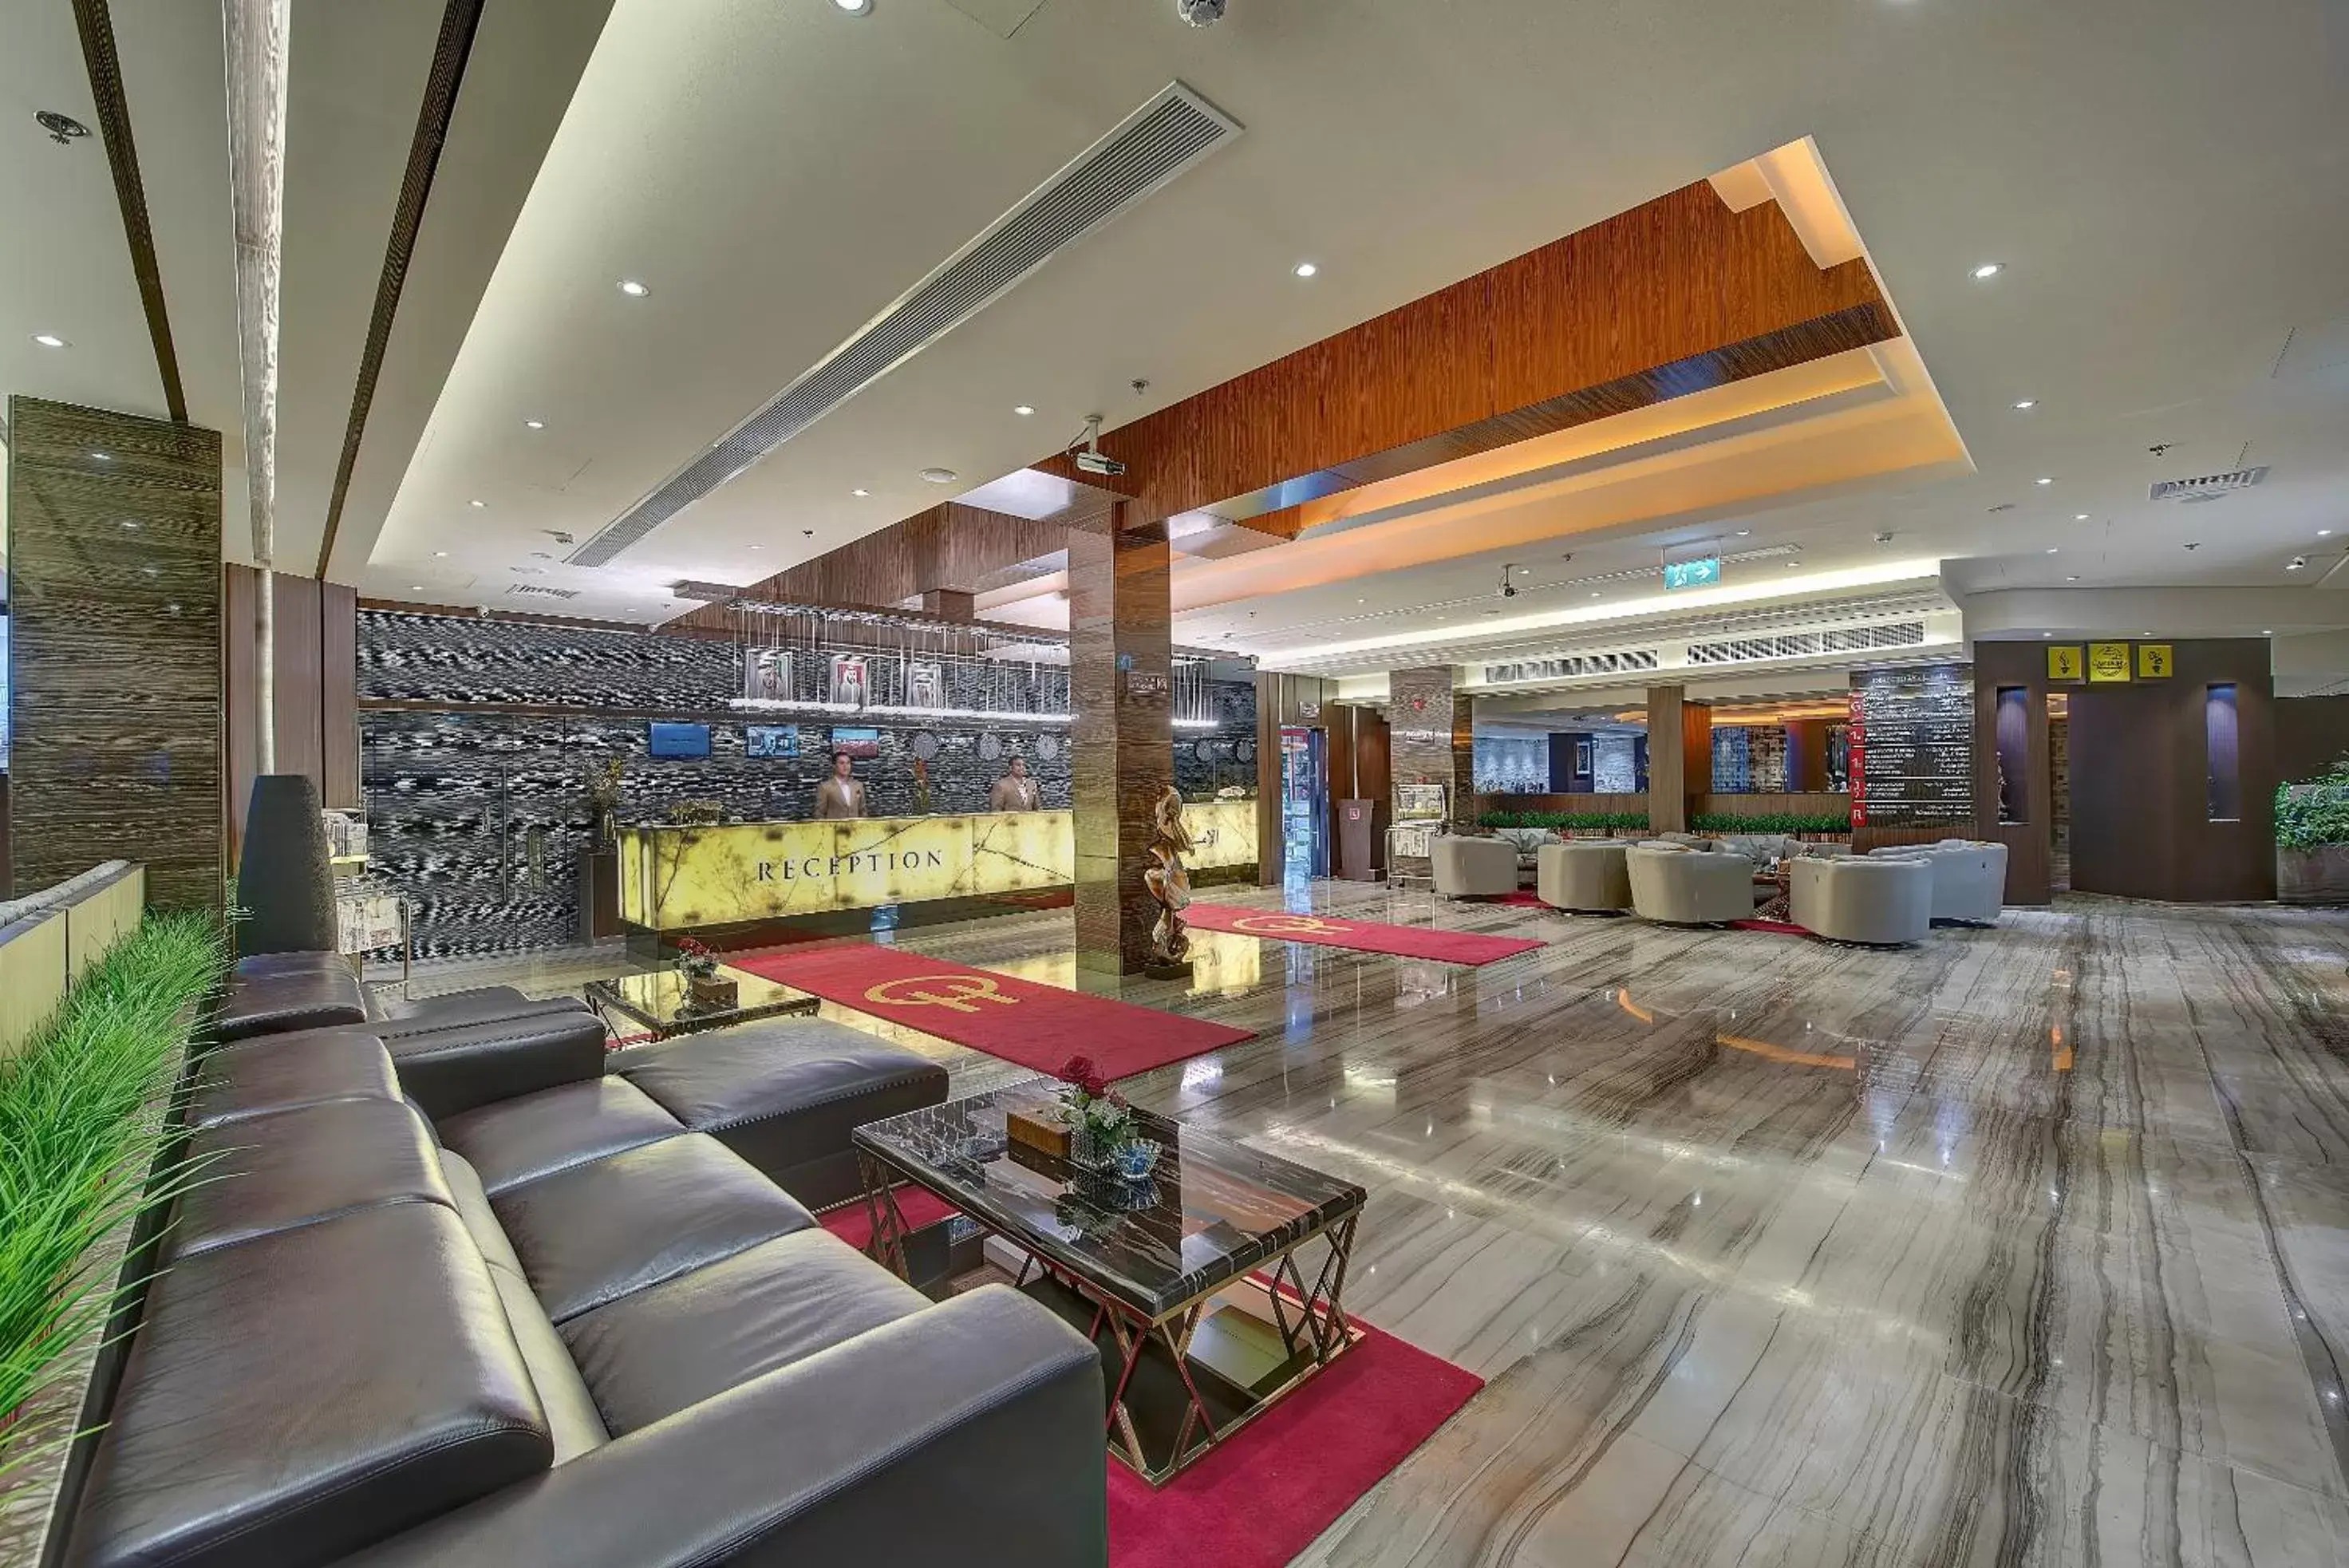 Lobby or reception in Omega Hotel Dubai